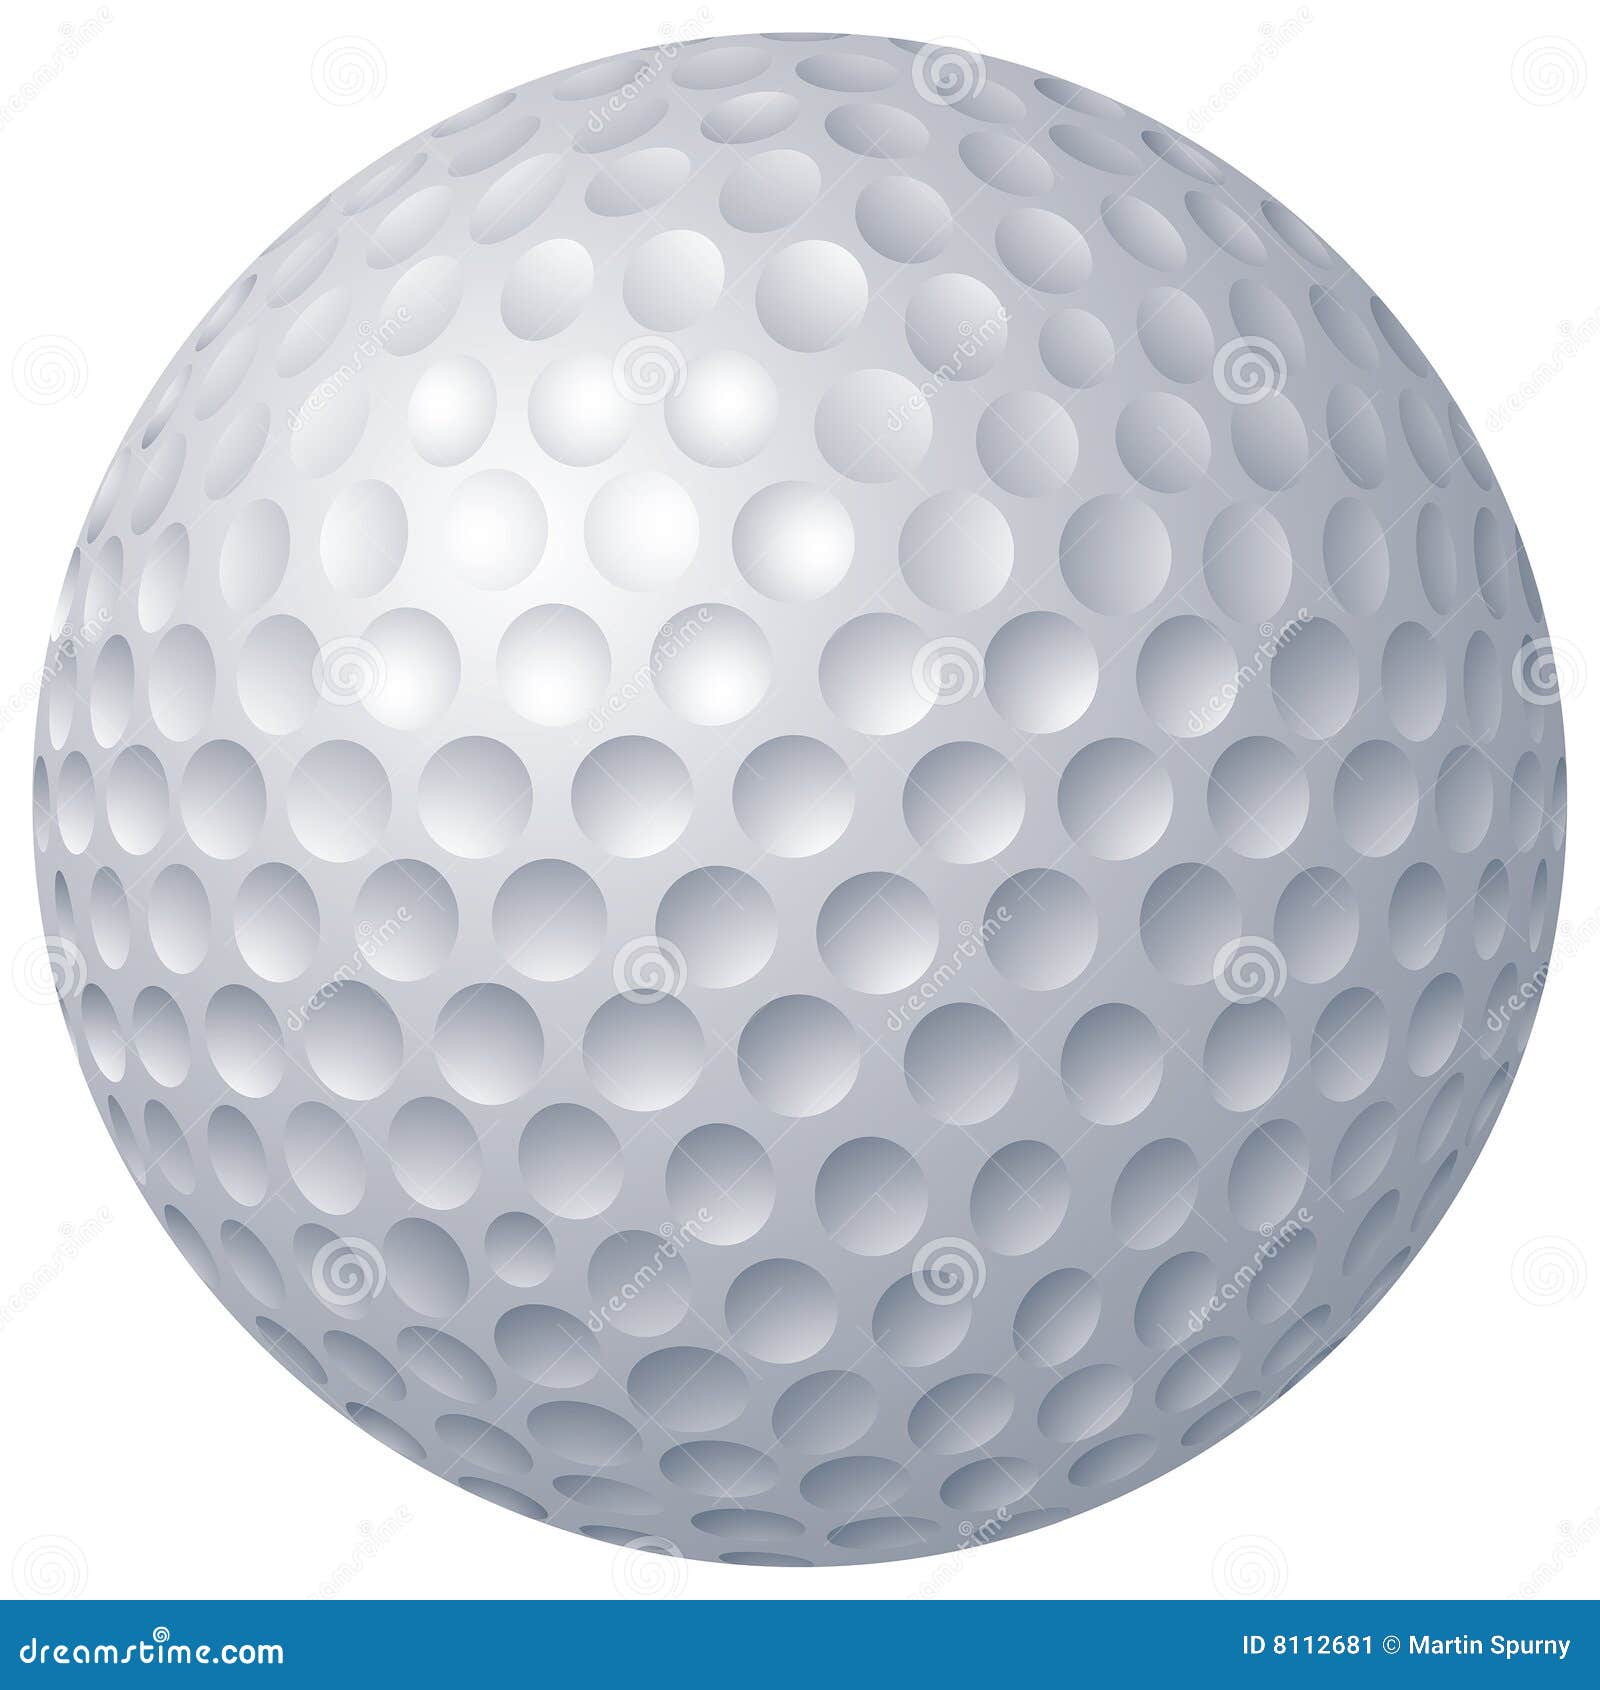 golf ball clipart - photo #45